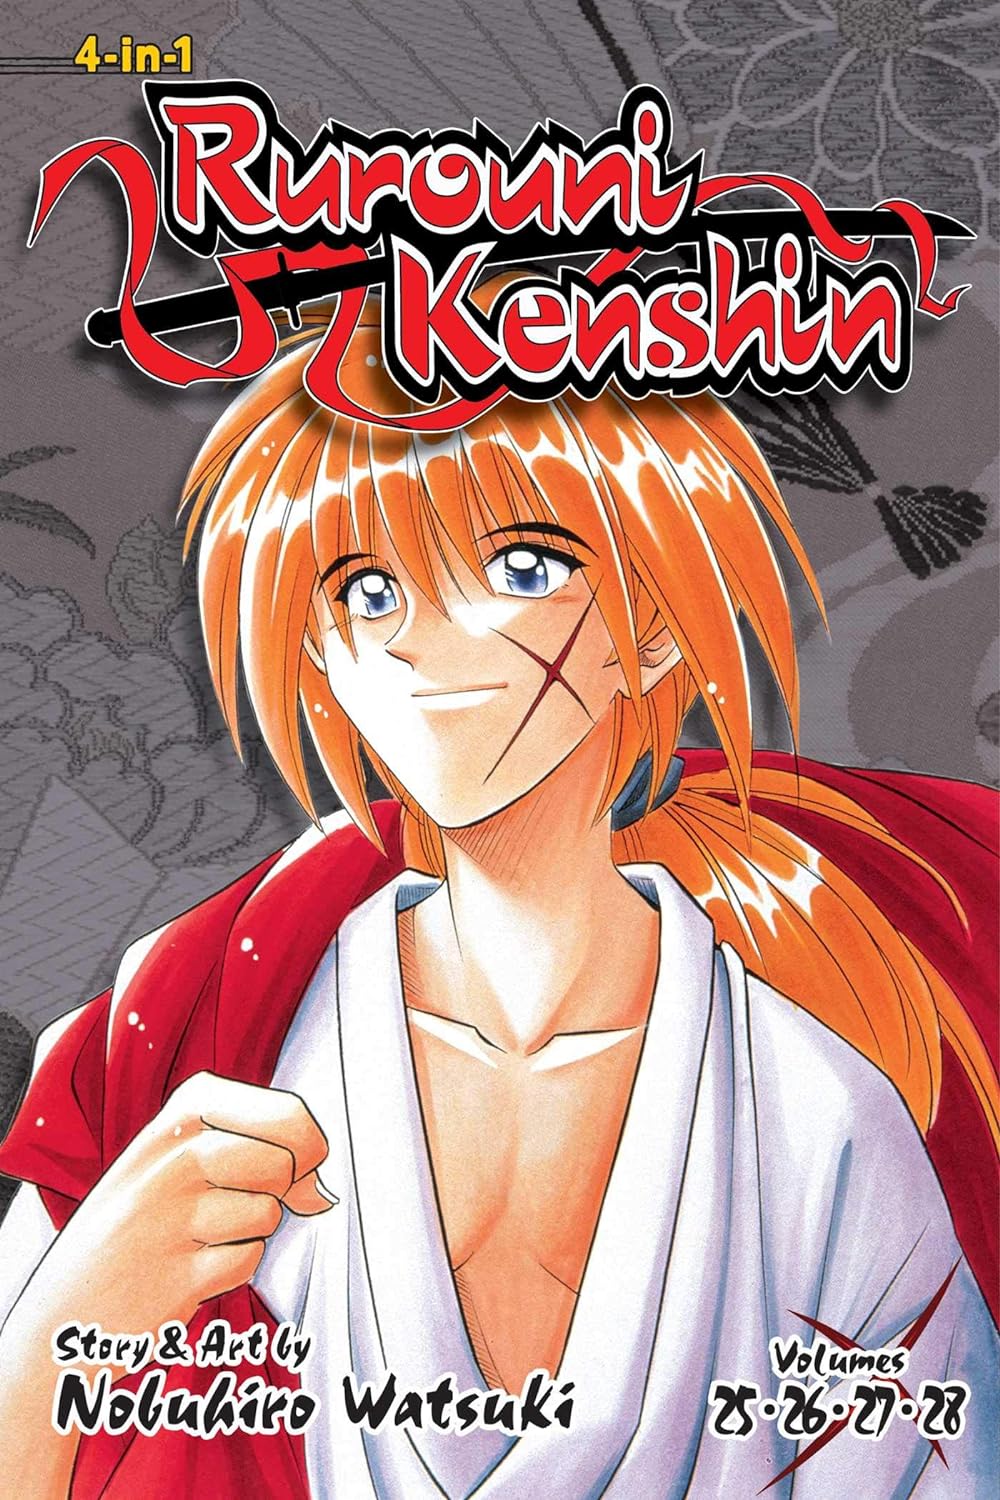 Rurouni Kenshin Volume 25-28 (4-in-1 Edition)